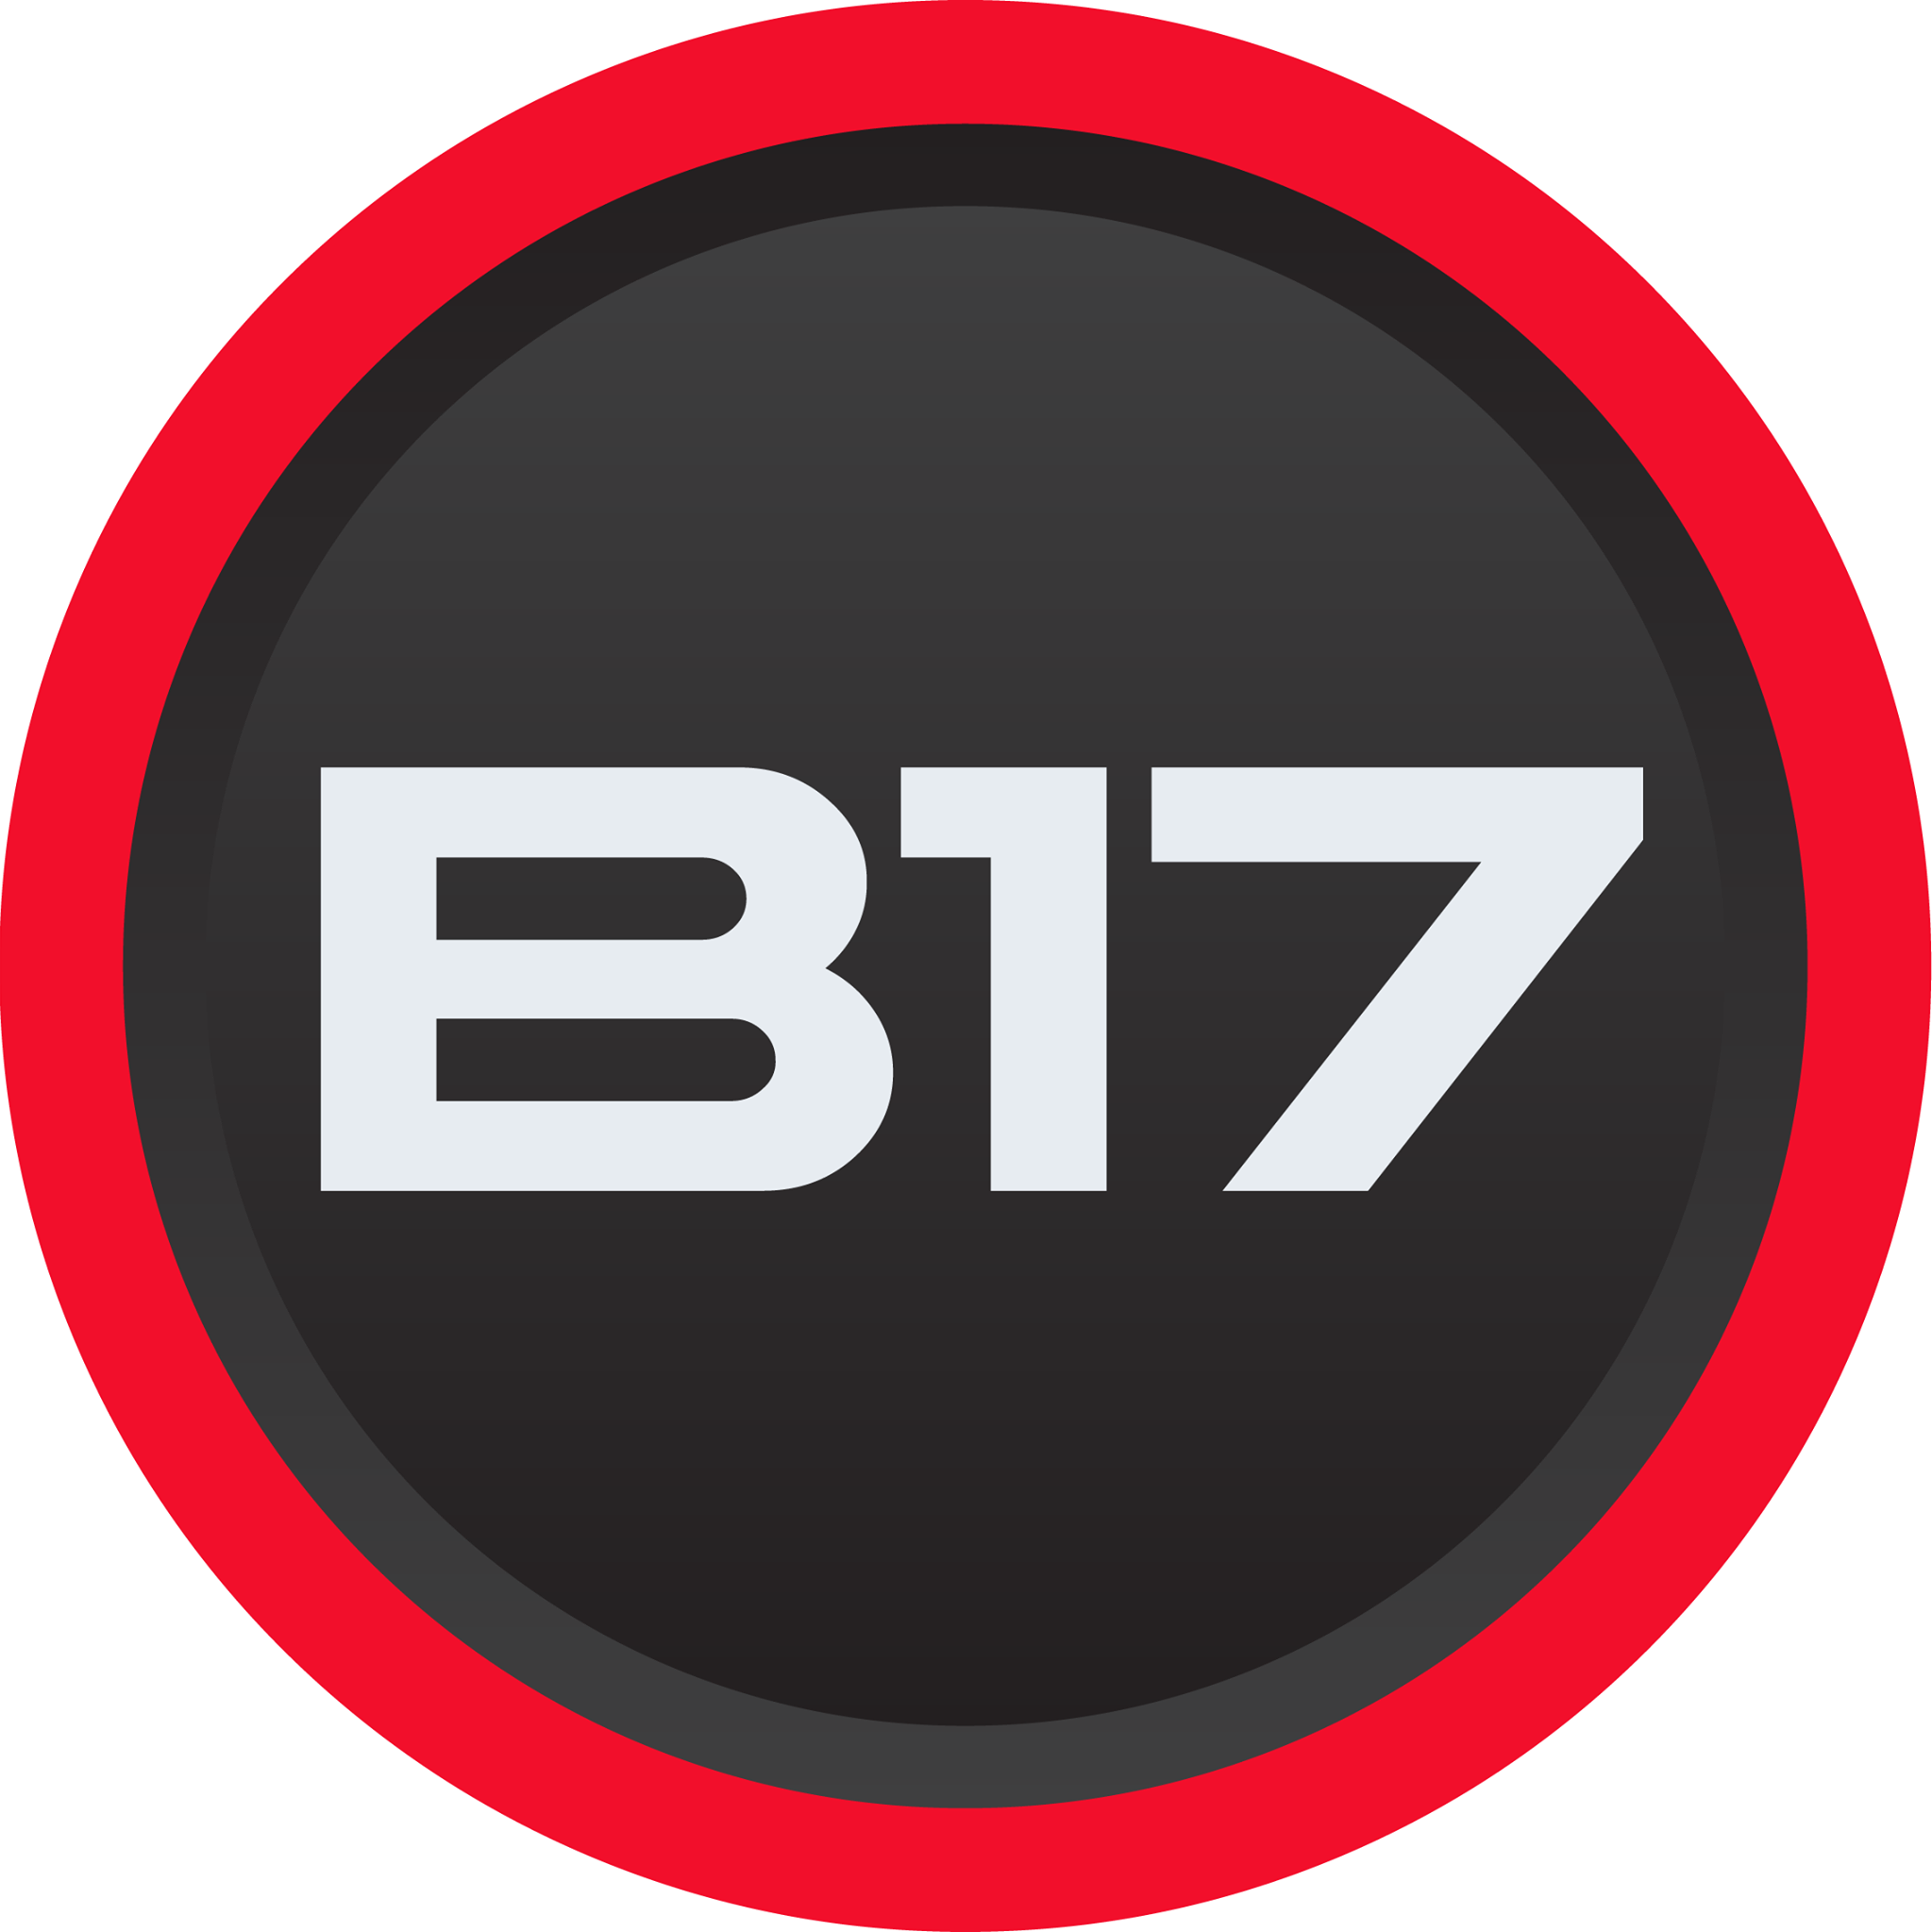 B17 Entertainment